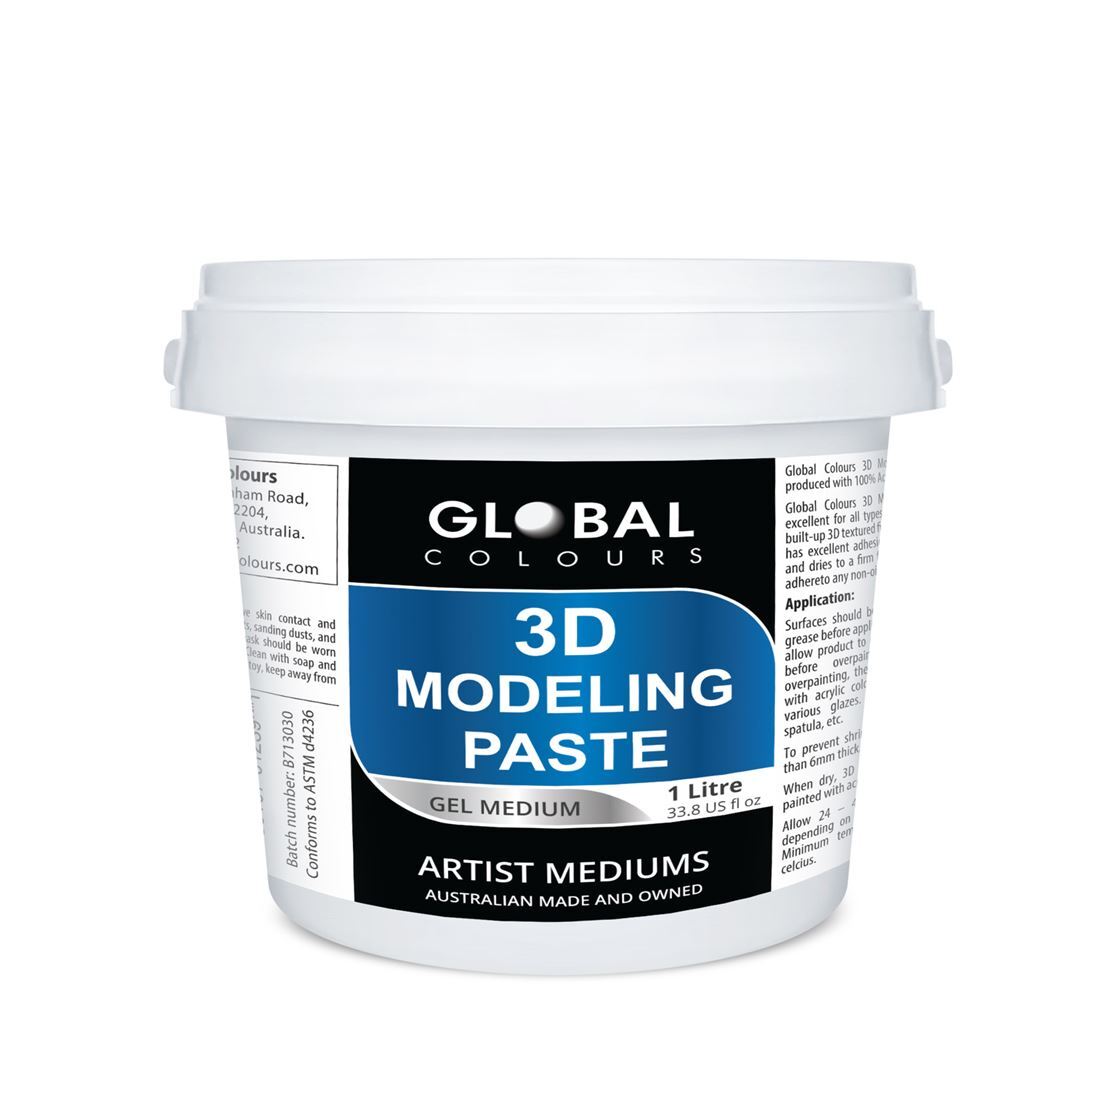 GLOBAL 3D MODELLING PASTE - Global